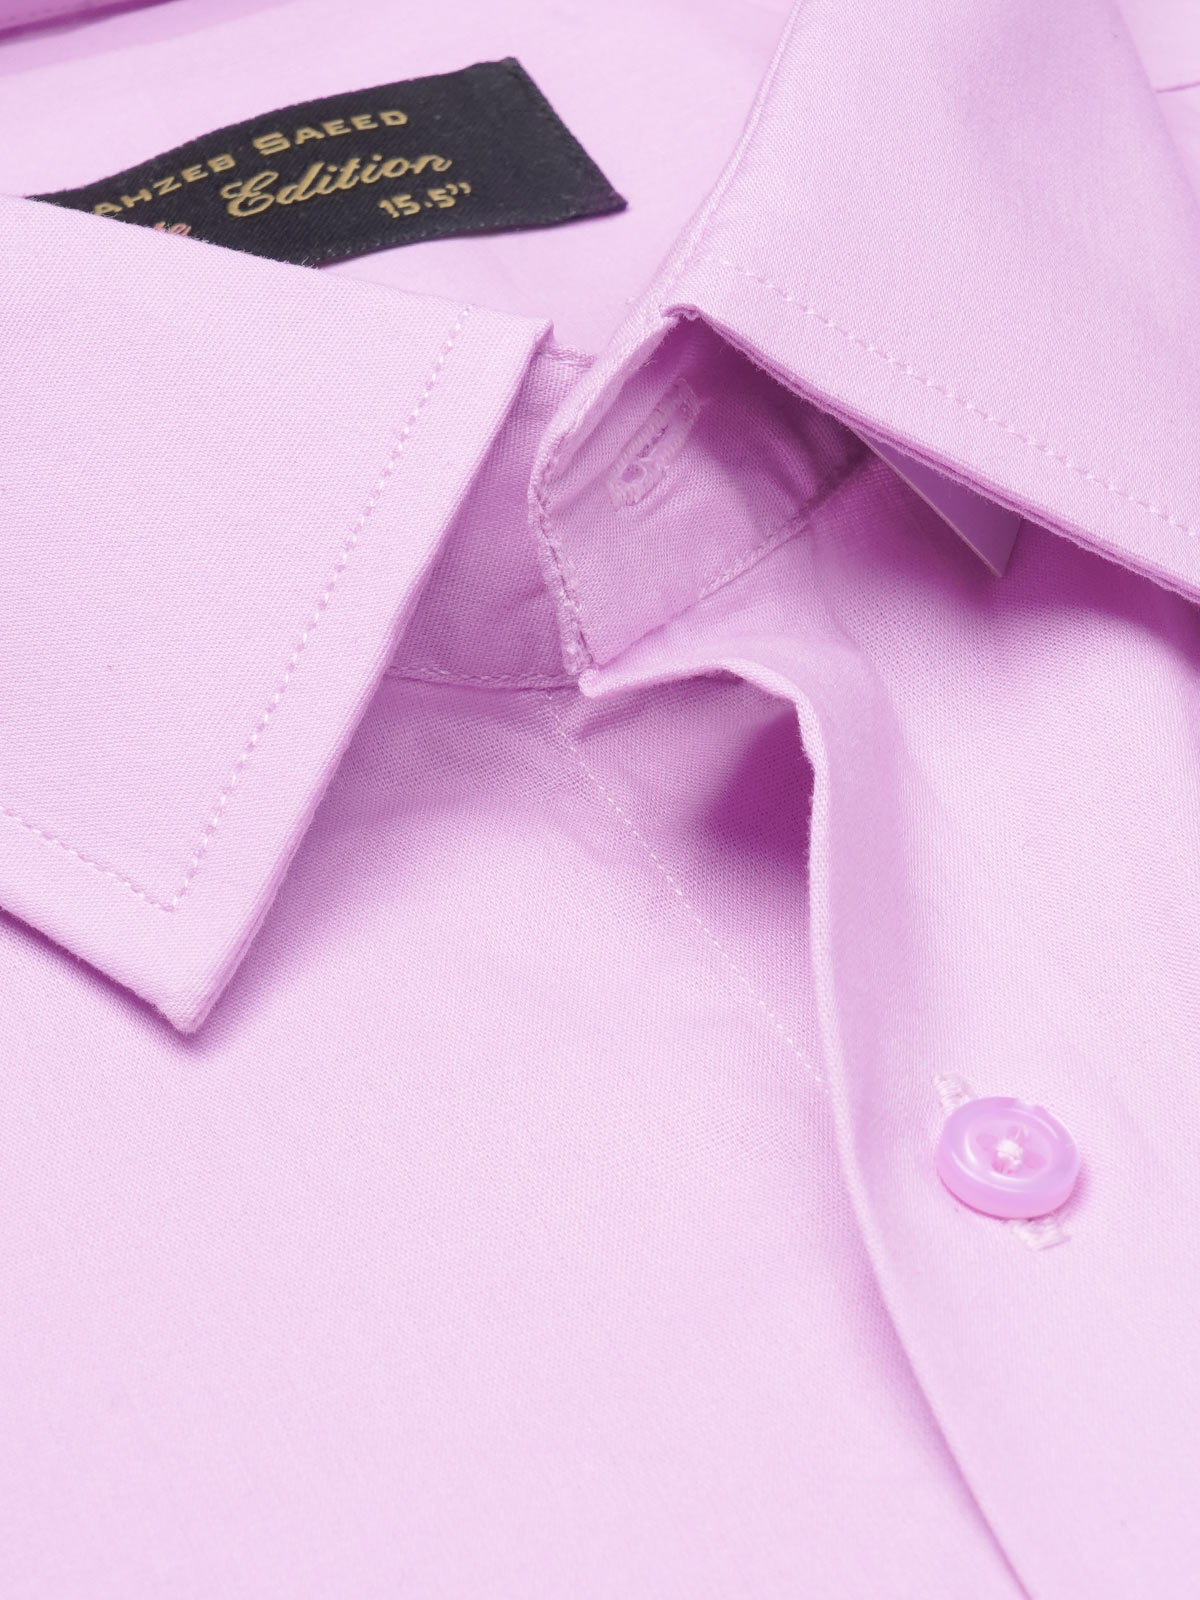 Light Purple Plain Elite Edition, French Collar Men’s Formal Shirt (FS-1110)